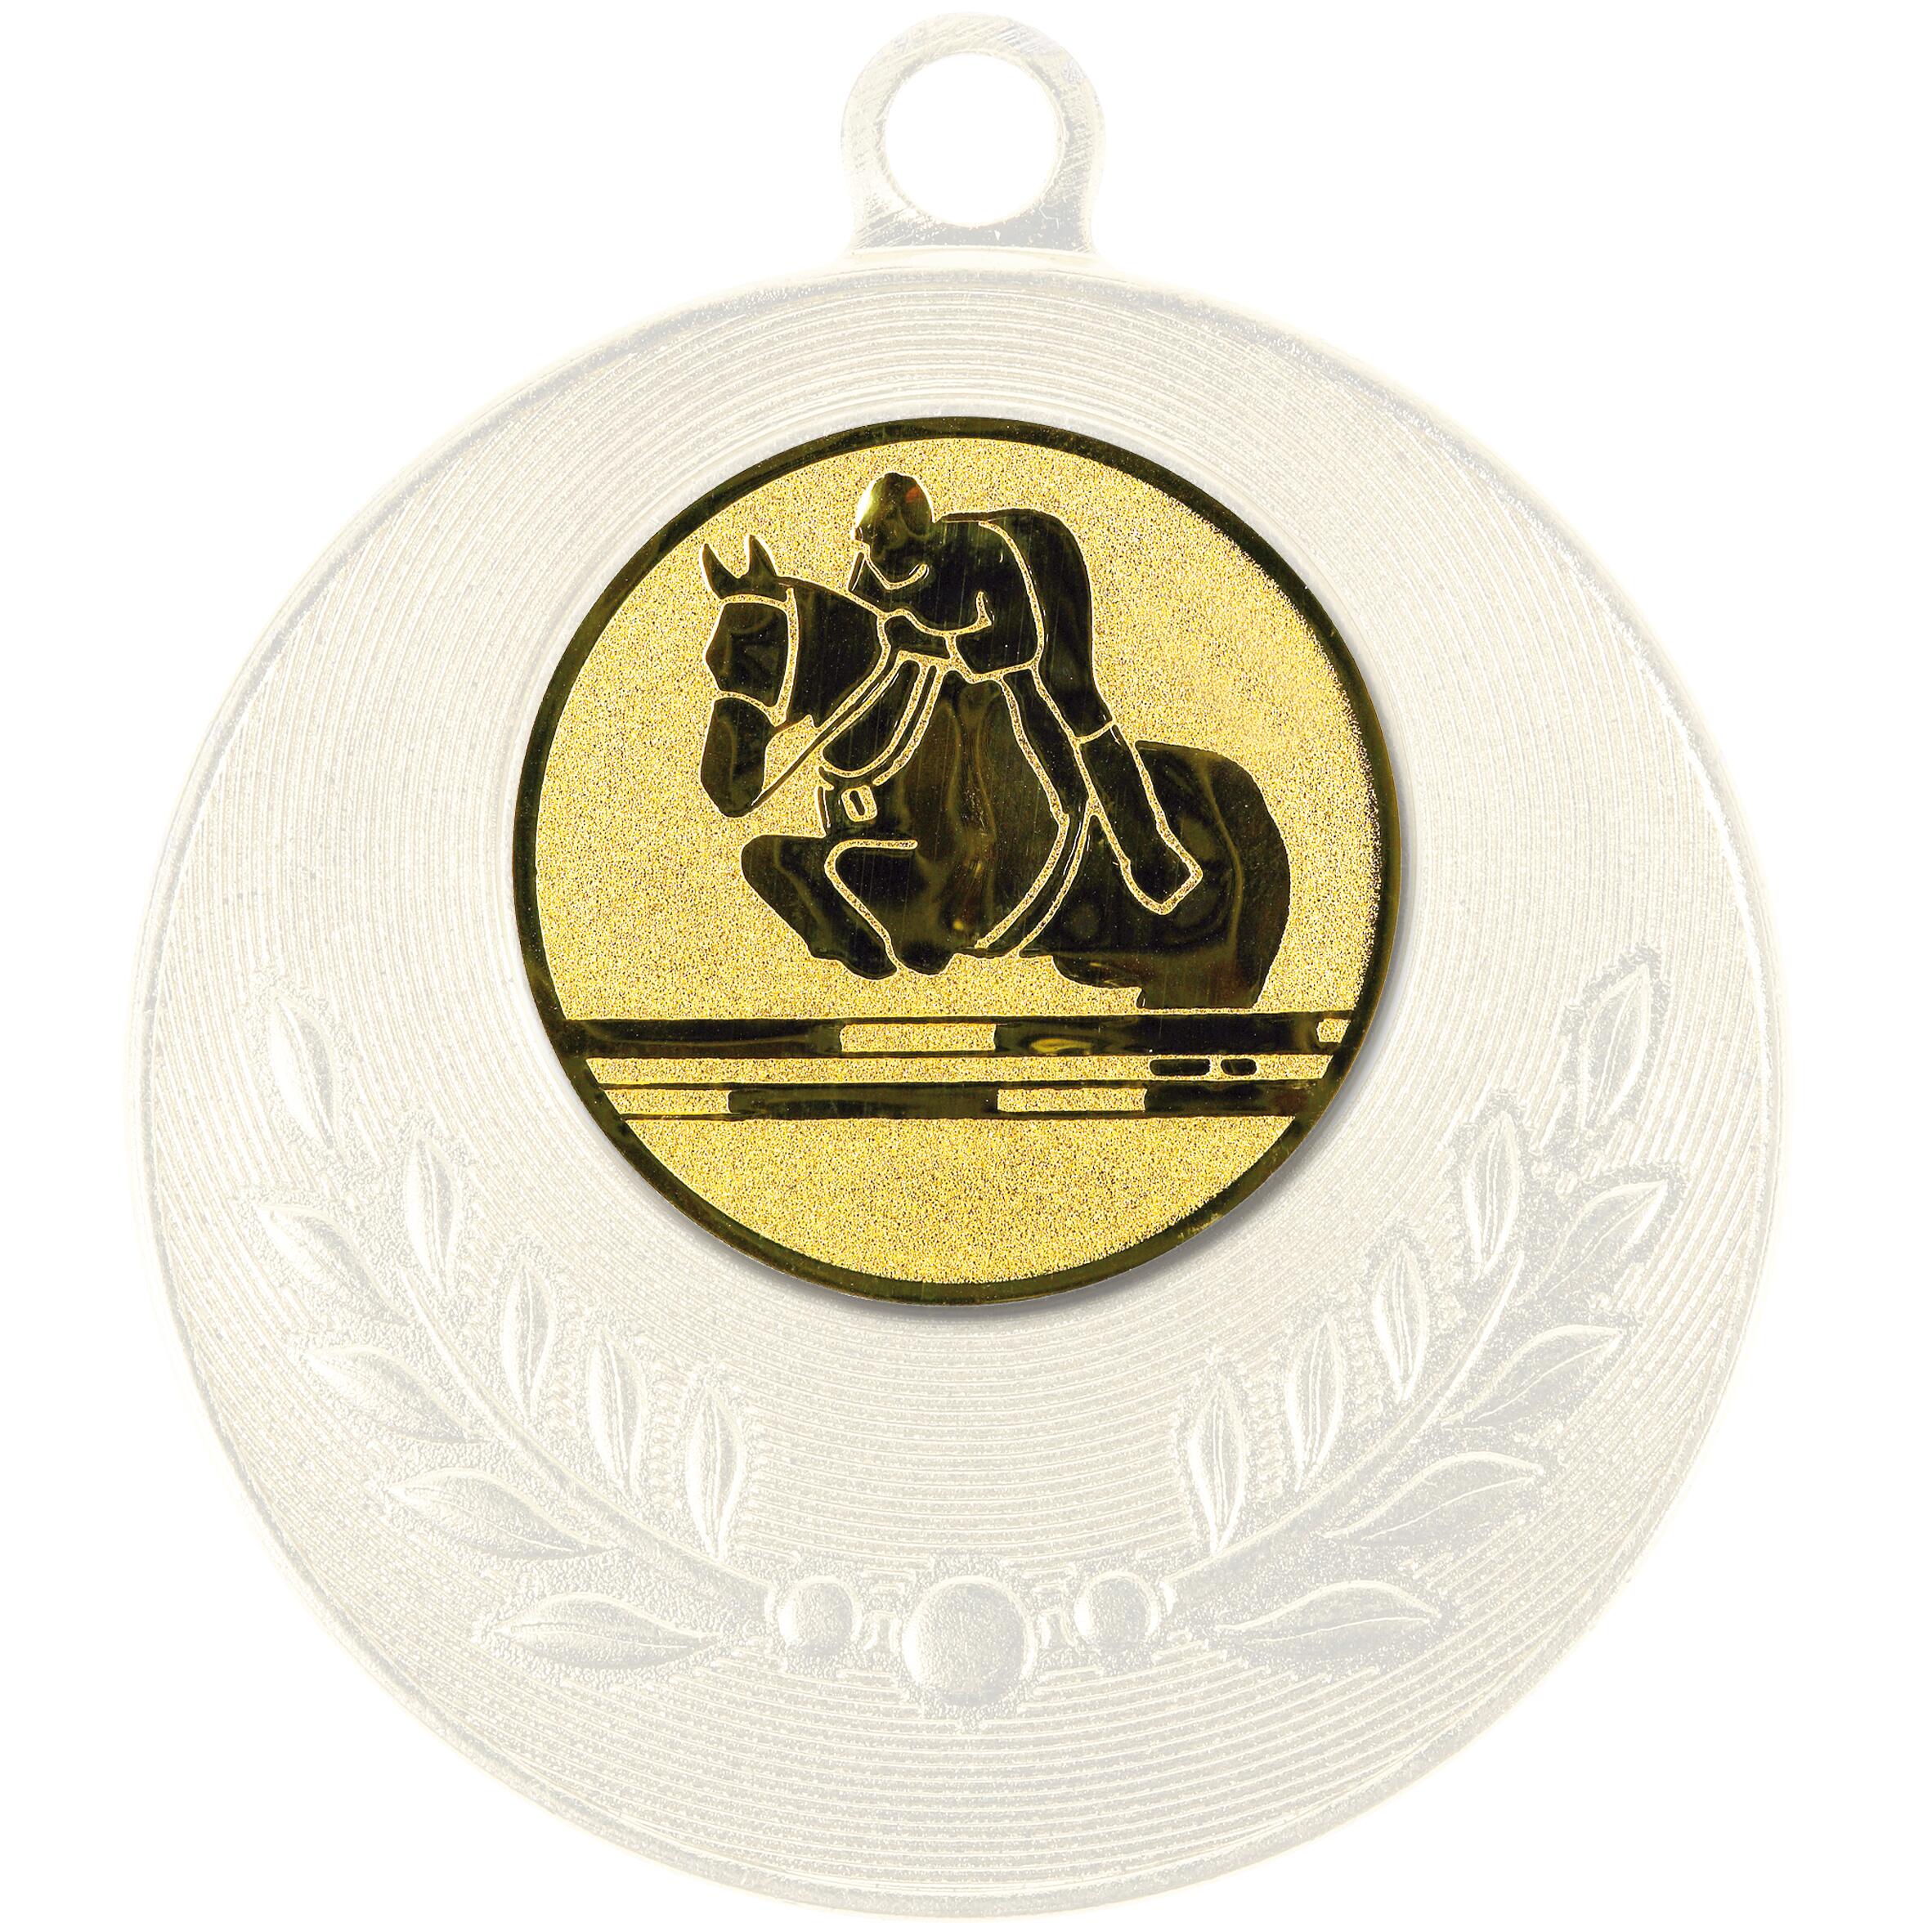 Sports Award Adhesive "Horse Riding" Sticker 1/2